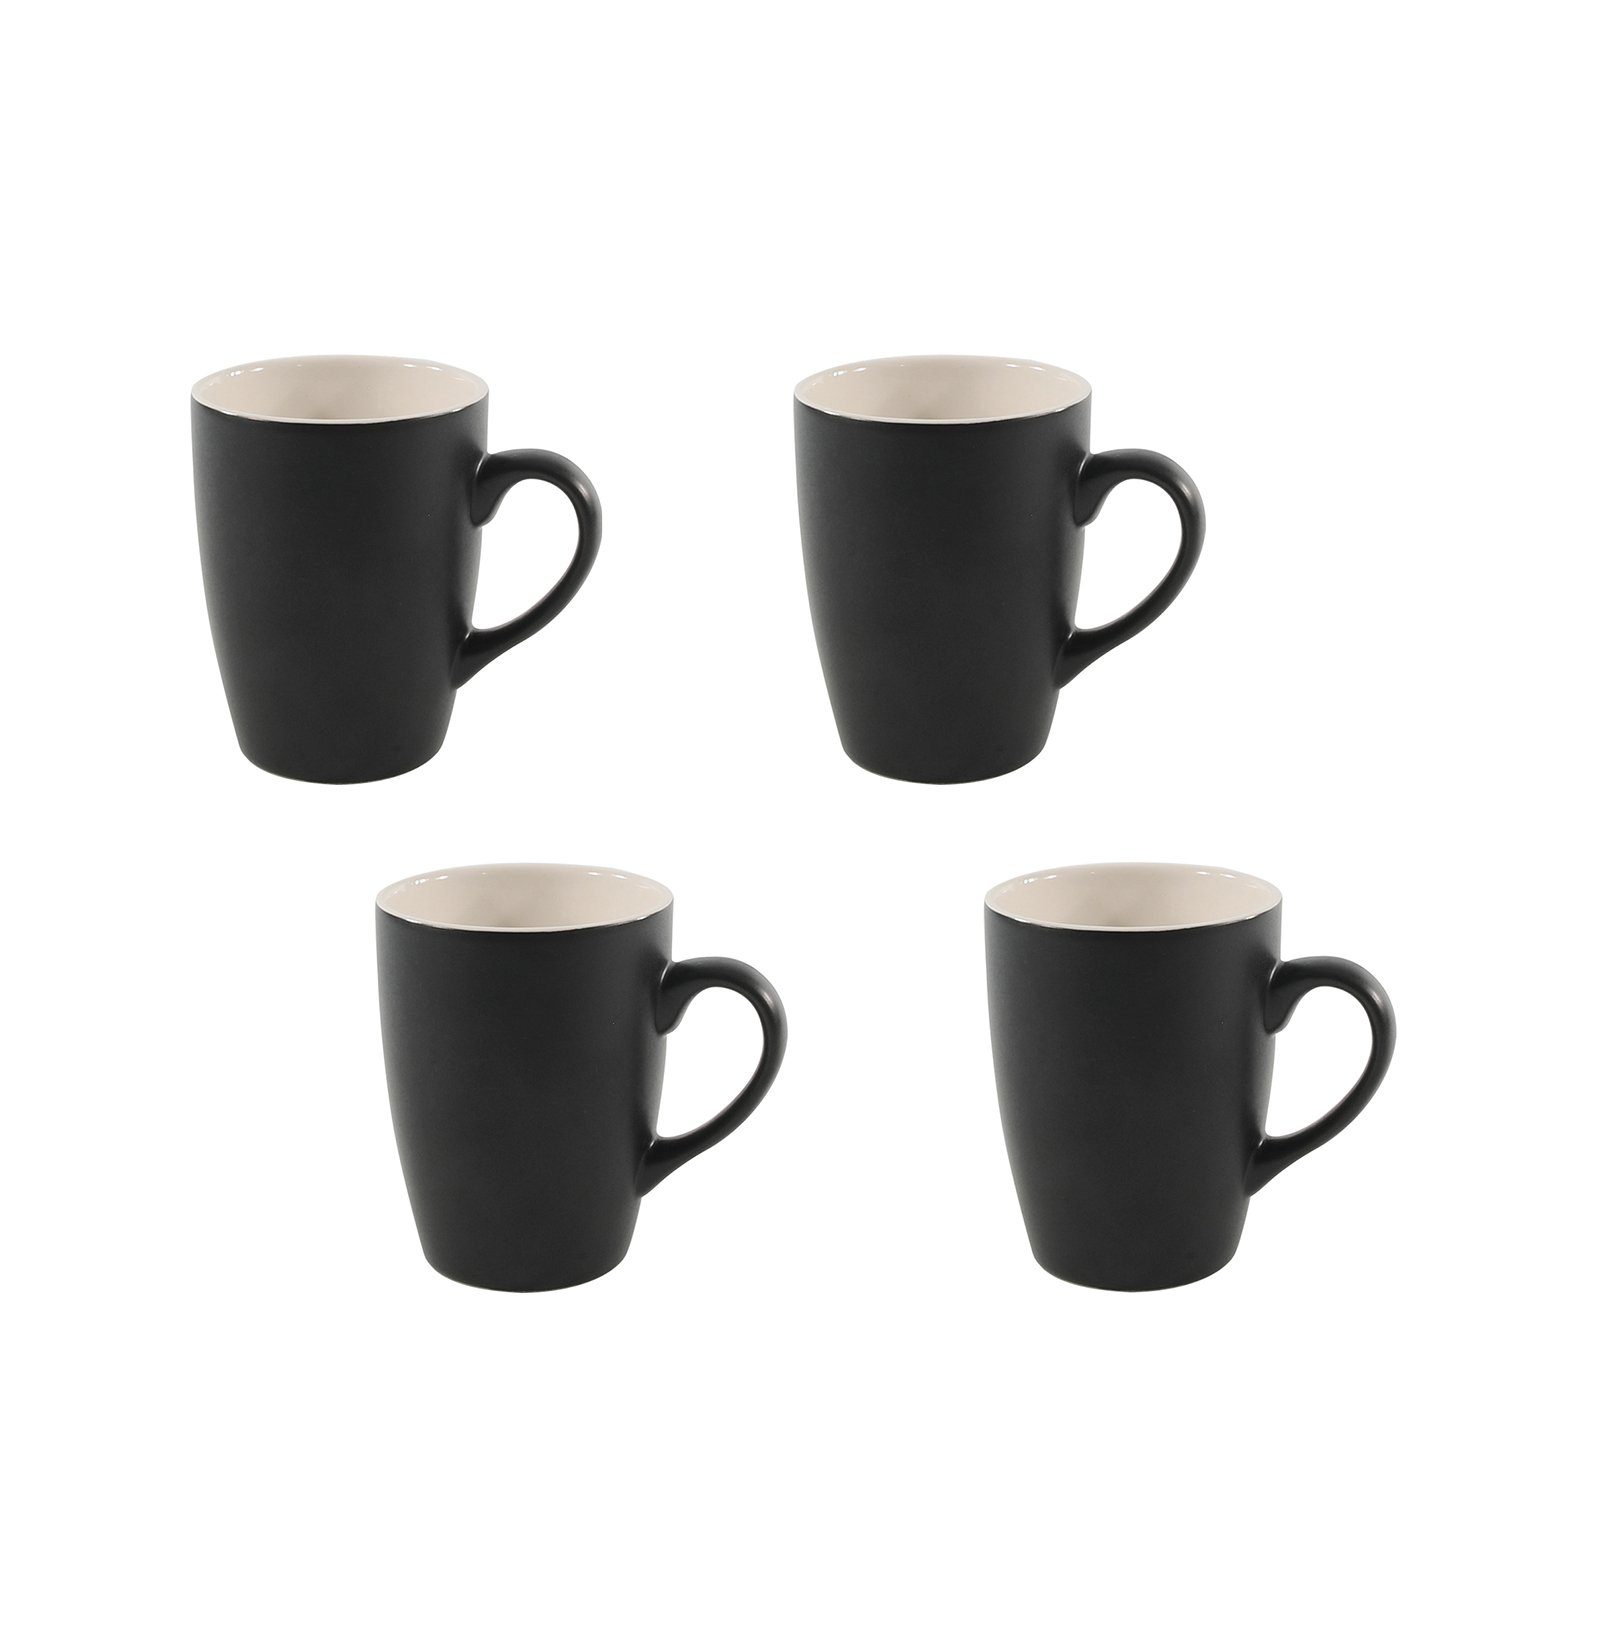 4er Matt, Tasse Teetasse Tasse Set Black Keramik, Neuetischkultur Kaffeetasse